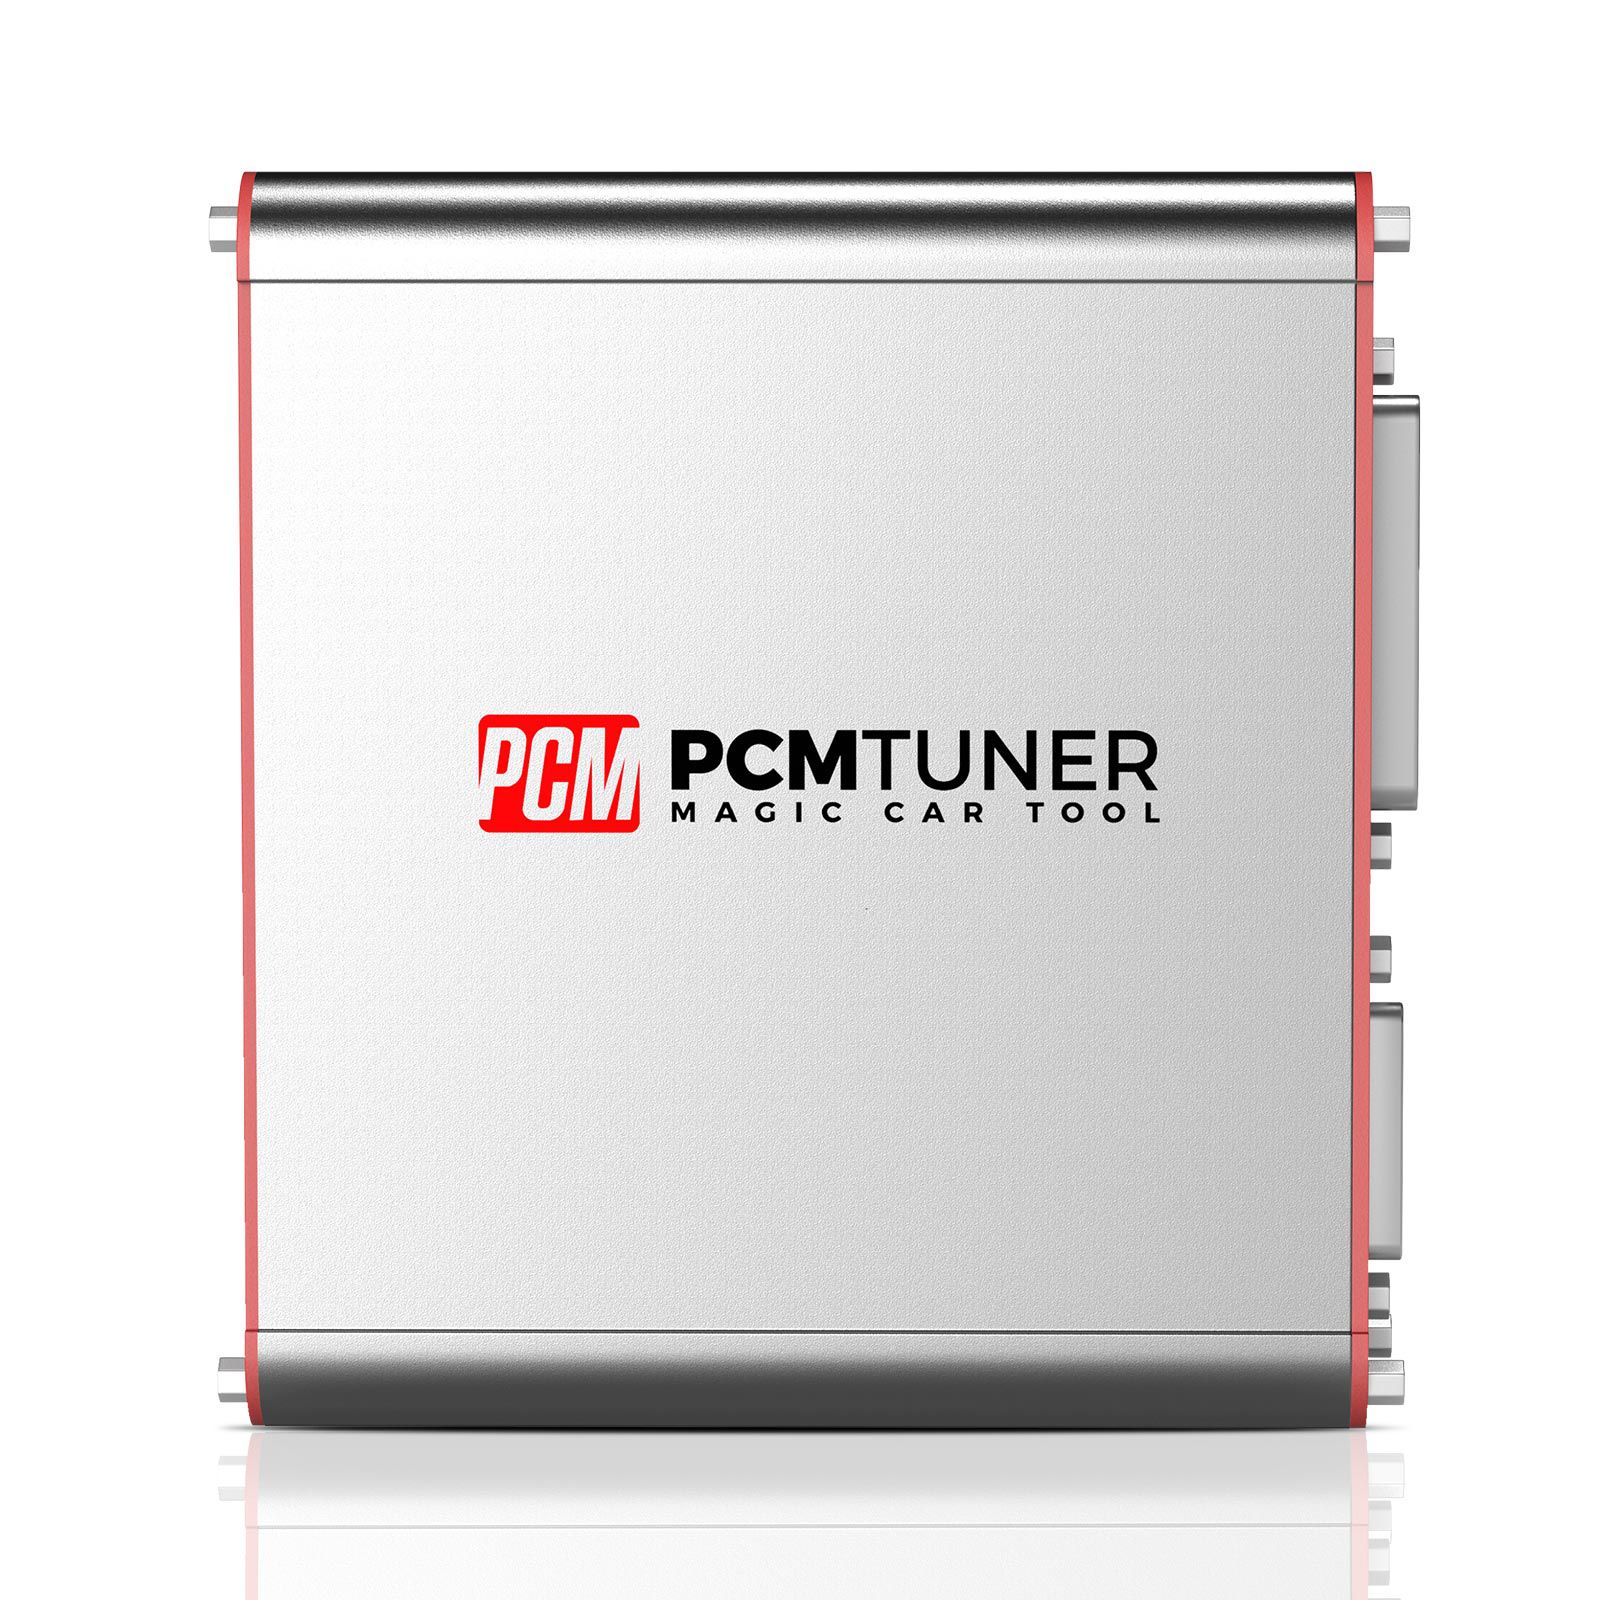 Afinador PCM programador de ECU + herramienta fetotech programador de ECU soporte plateado mg1 md1 edc16 med9.1 ECU